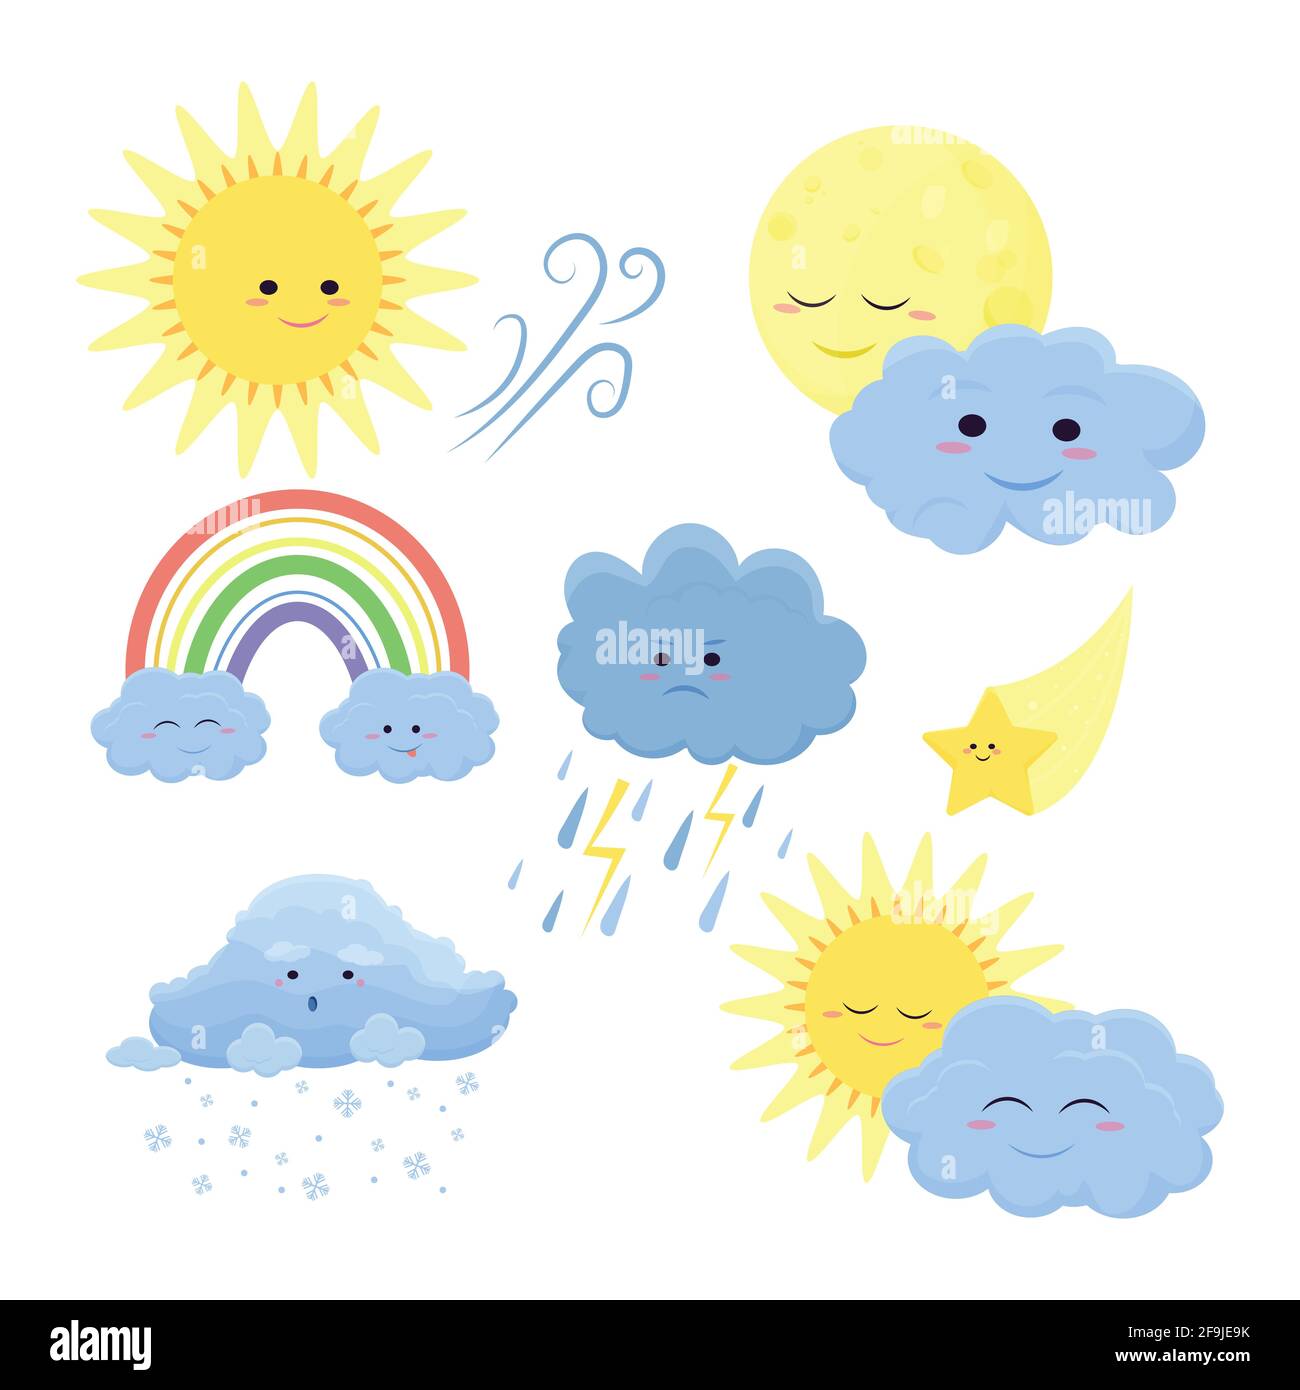 Cute weather icons set in cartoon flat style isolated on white background. Vector illustration of sun, rain, storm, snow, wind, moon, star, rainbow. F Stock Vector